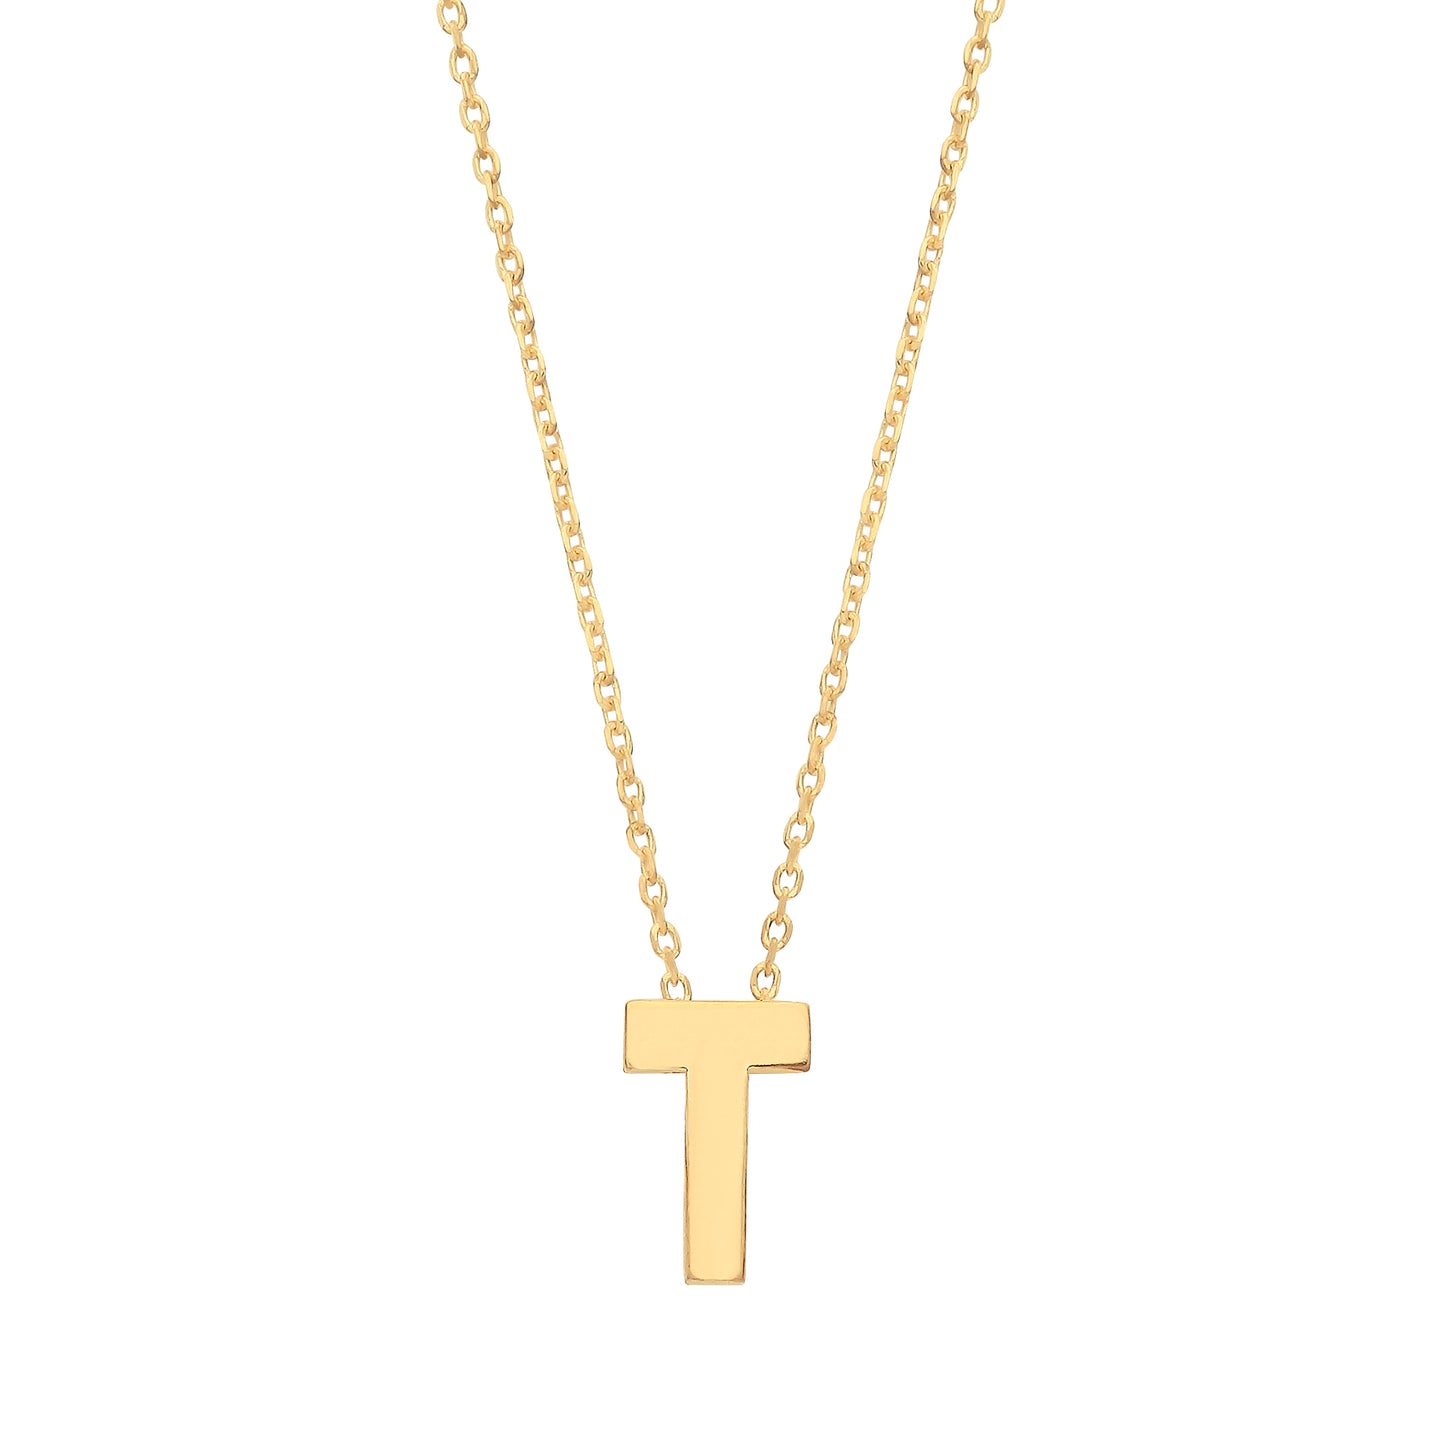 9ct Gold  Letter T Initial Pendant Necklace 17 inch 43cm - G9P6032T